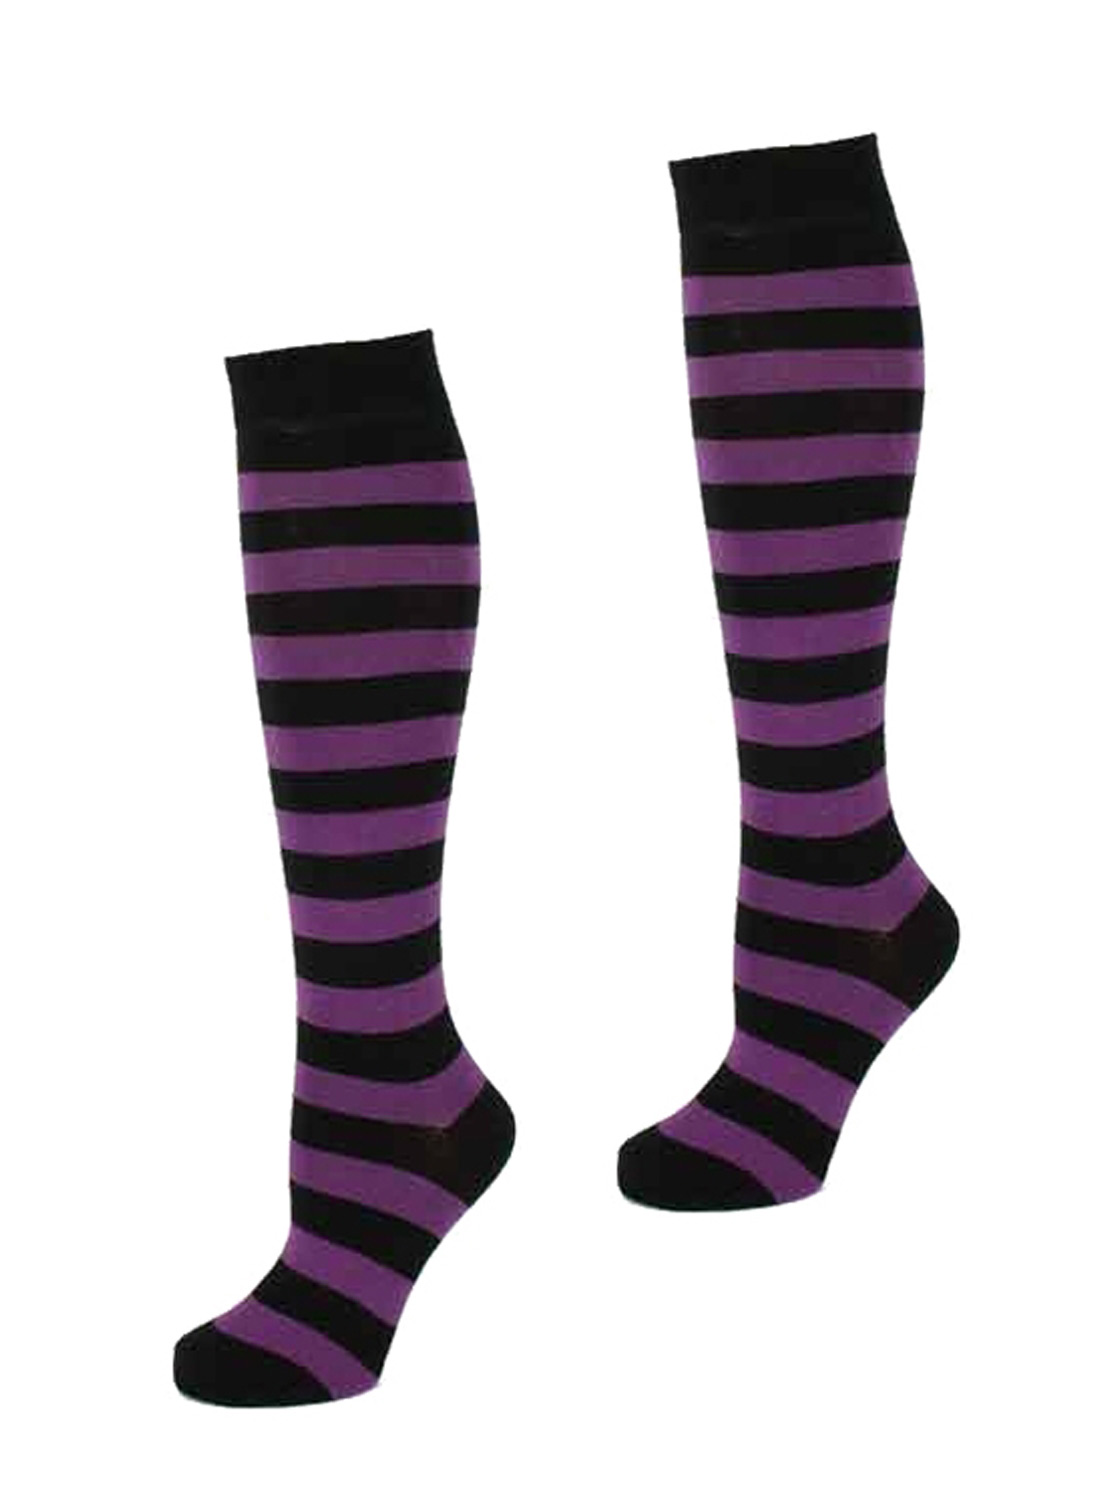 KH Socks Black Purple Stripes